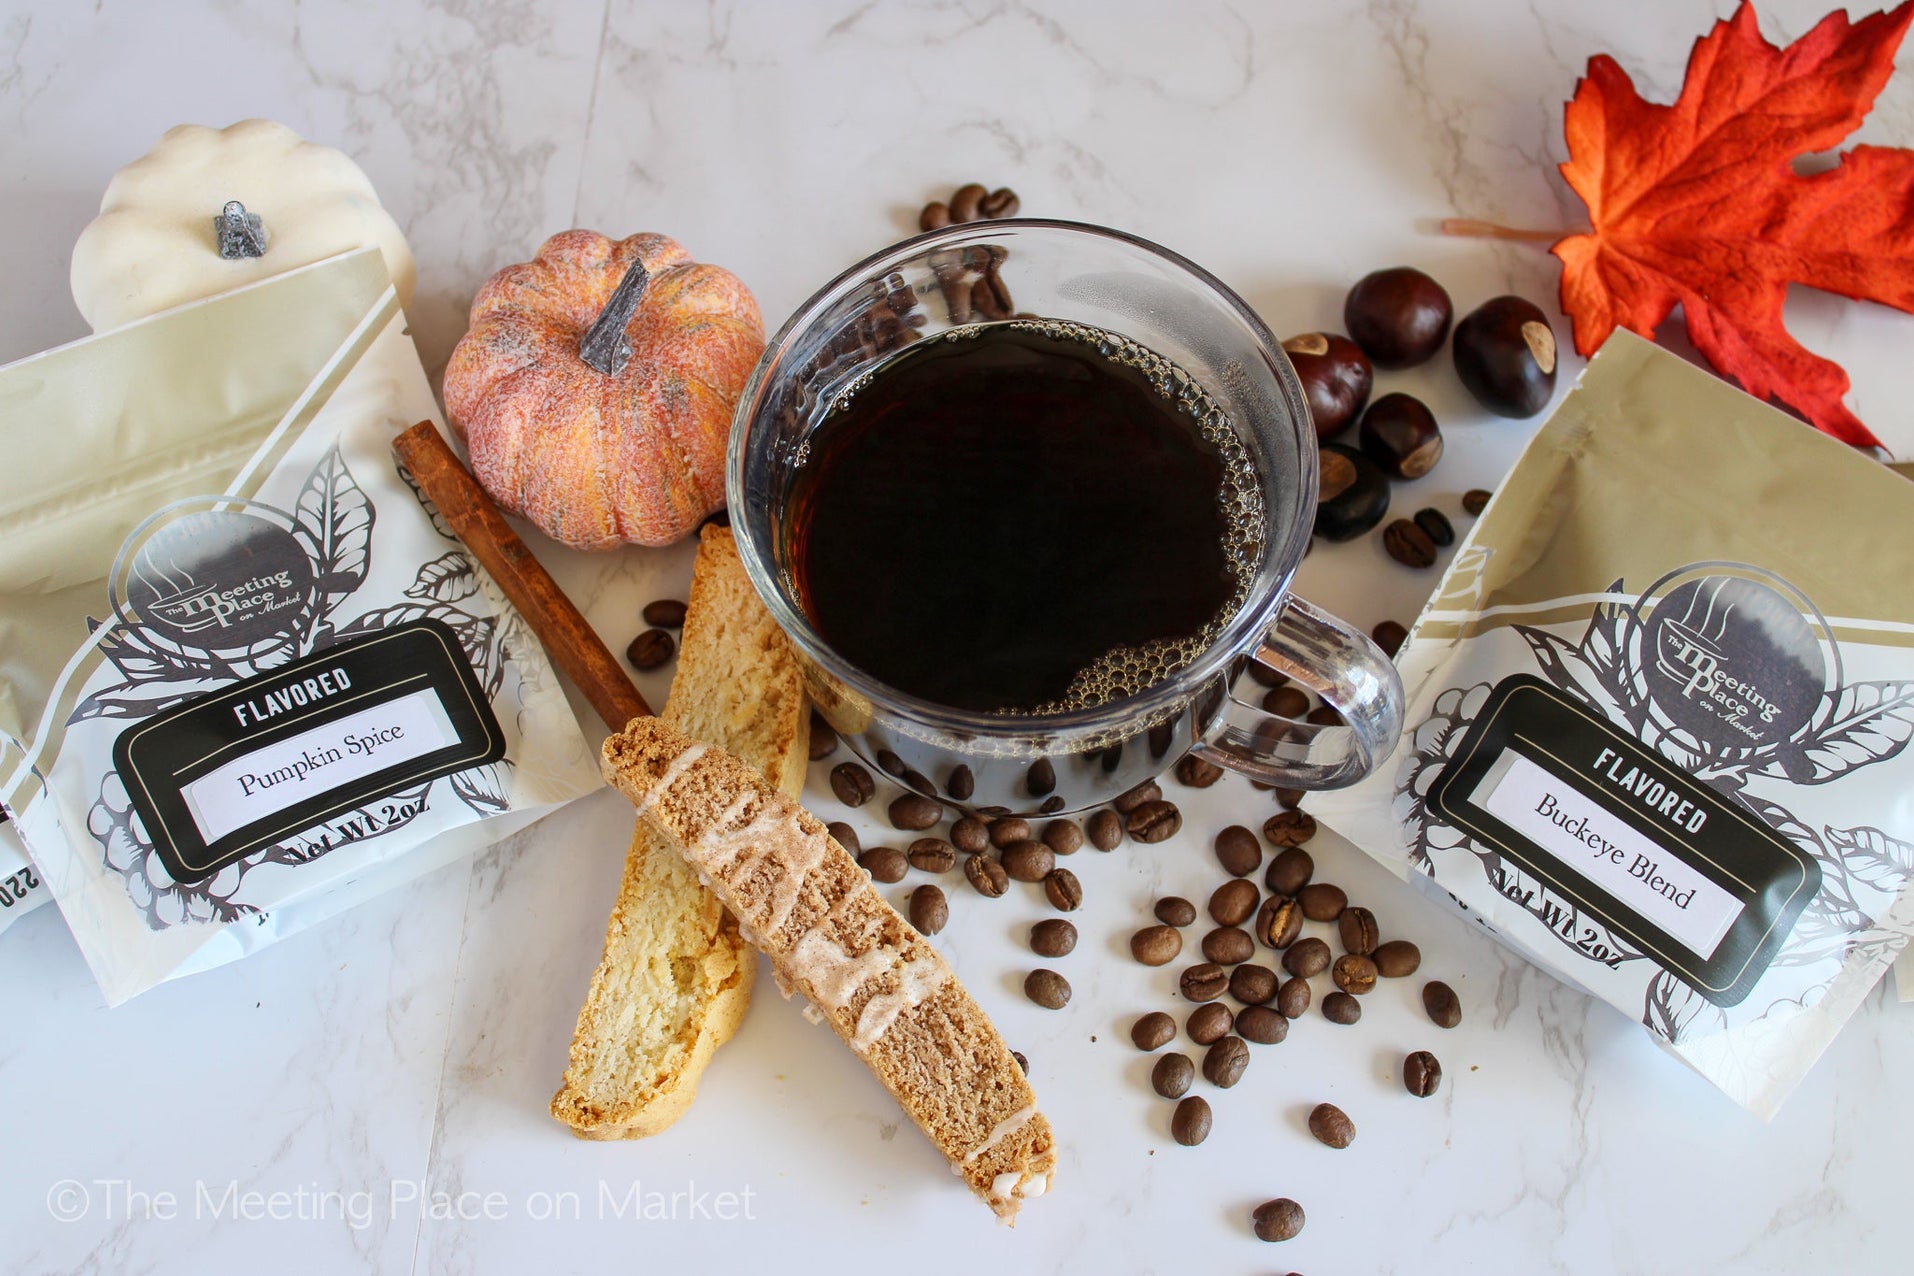 Coffee and Biscotti Gift Box – Carolina Coffee Company